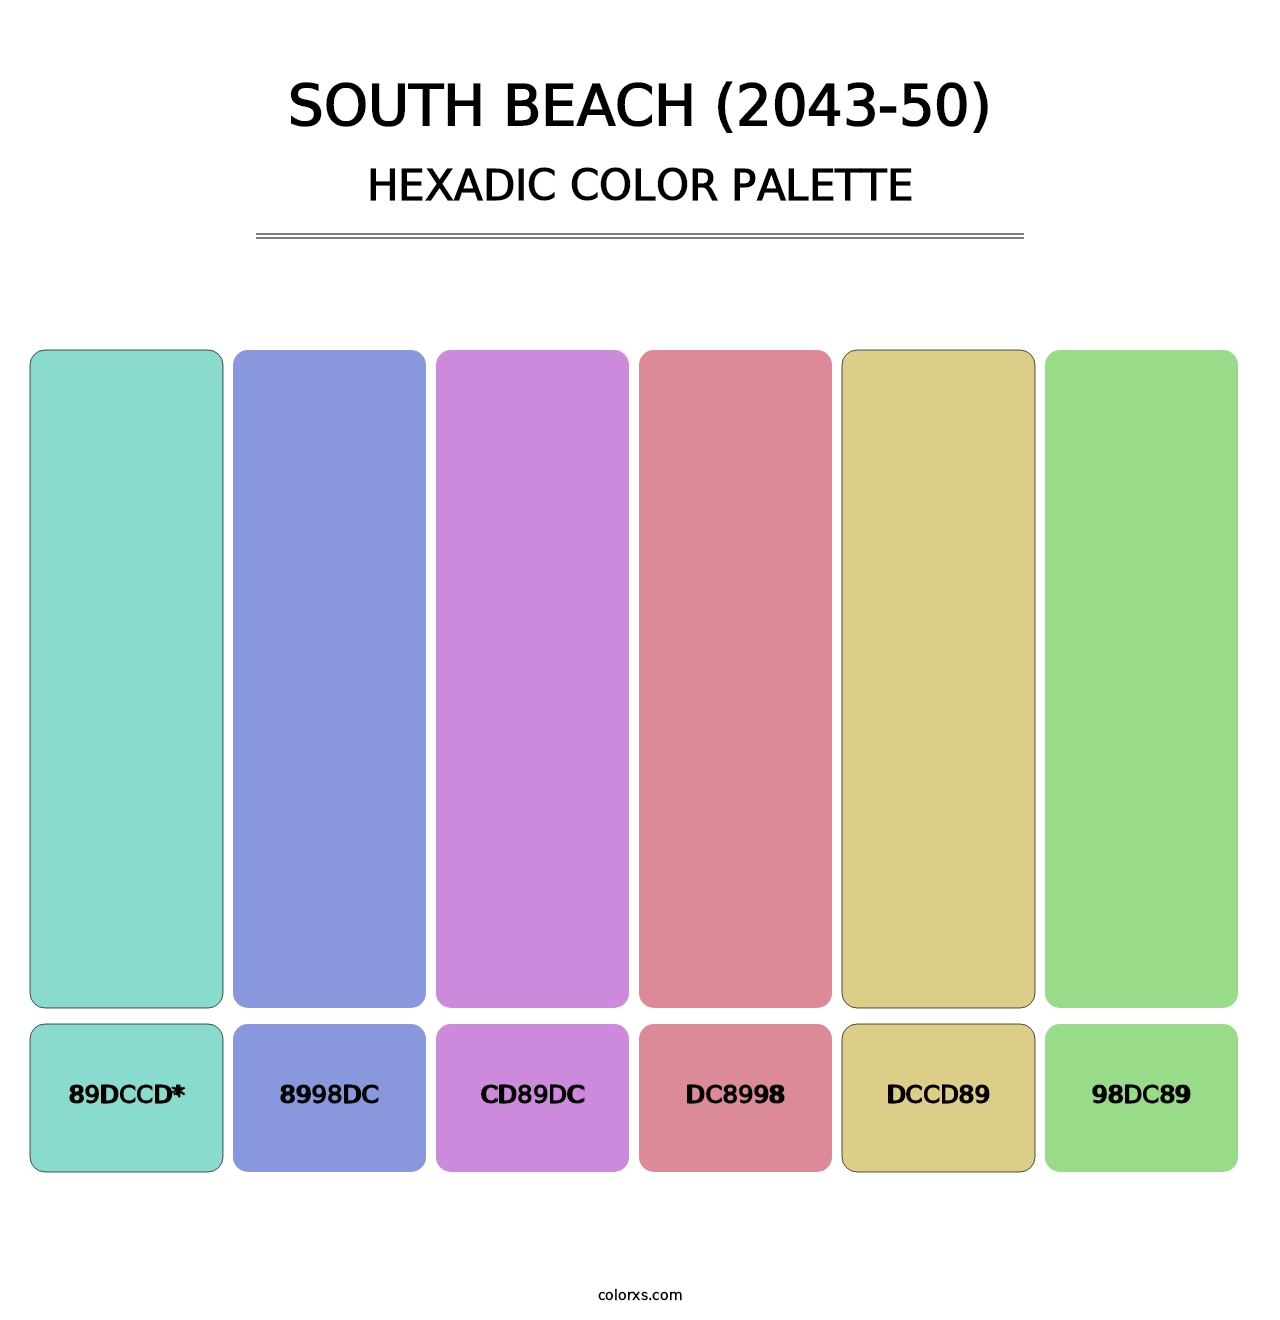 South Beach (2043-50) - Hexadic Color Palette